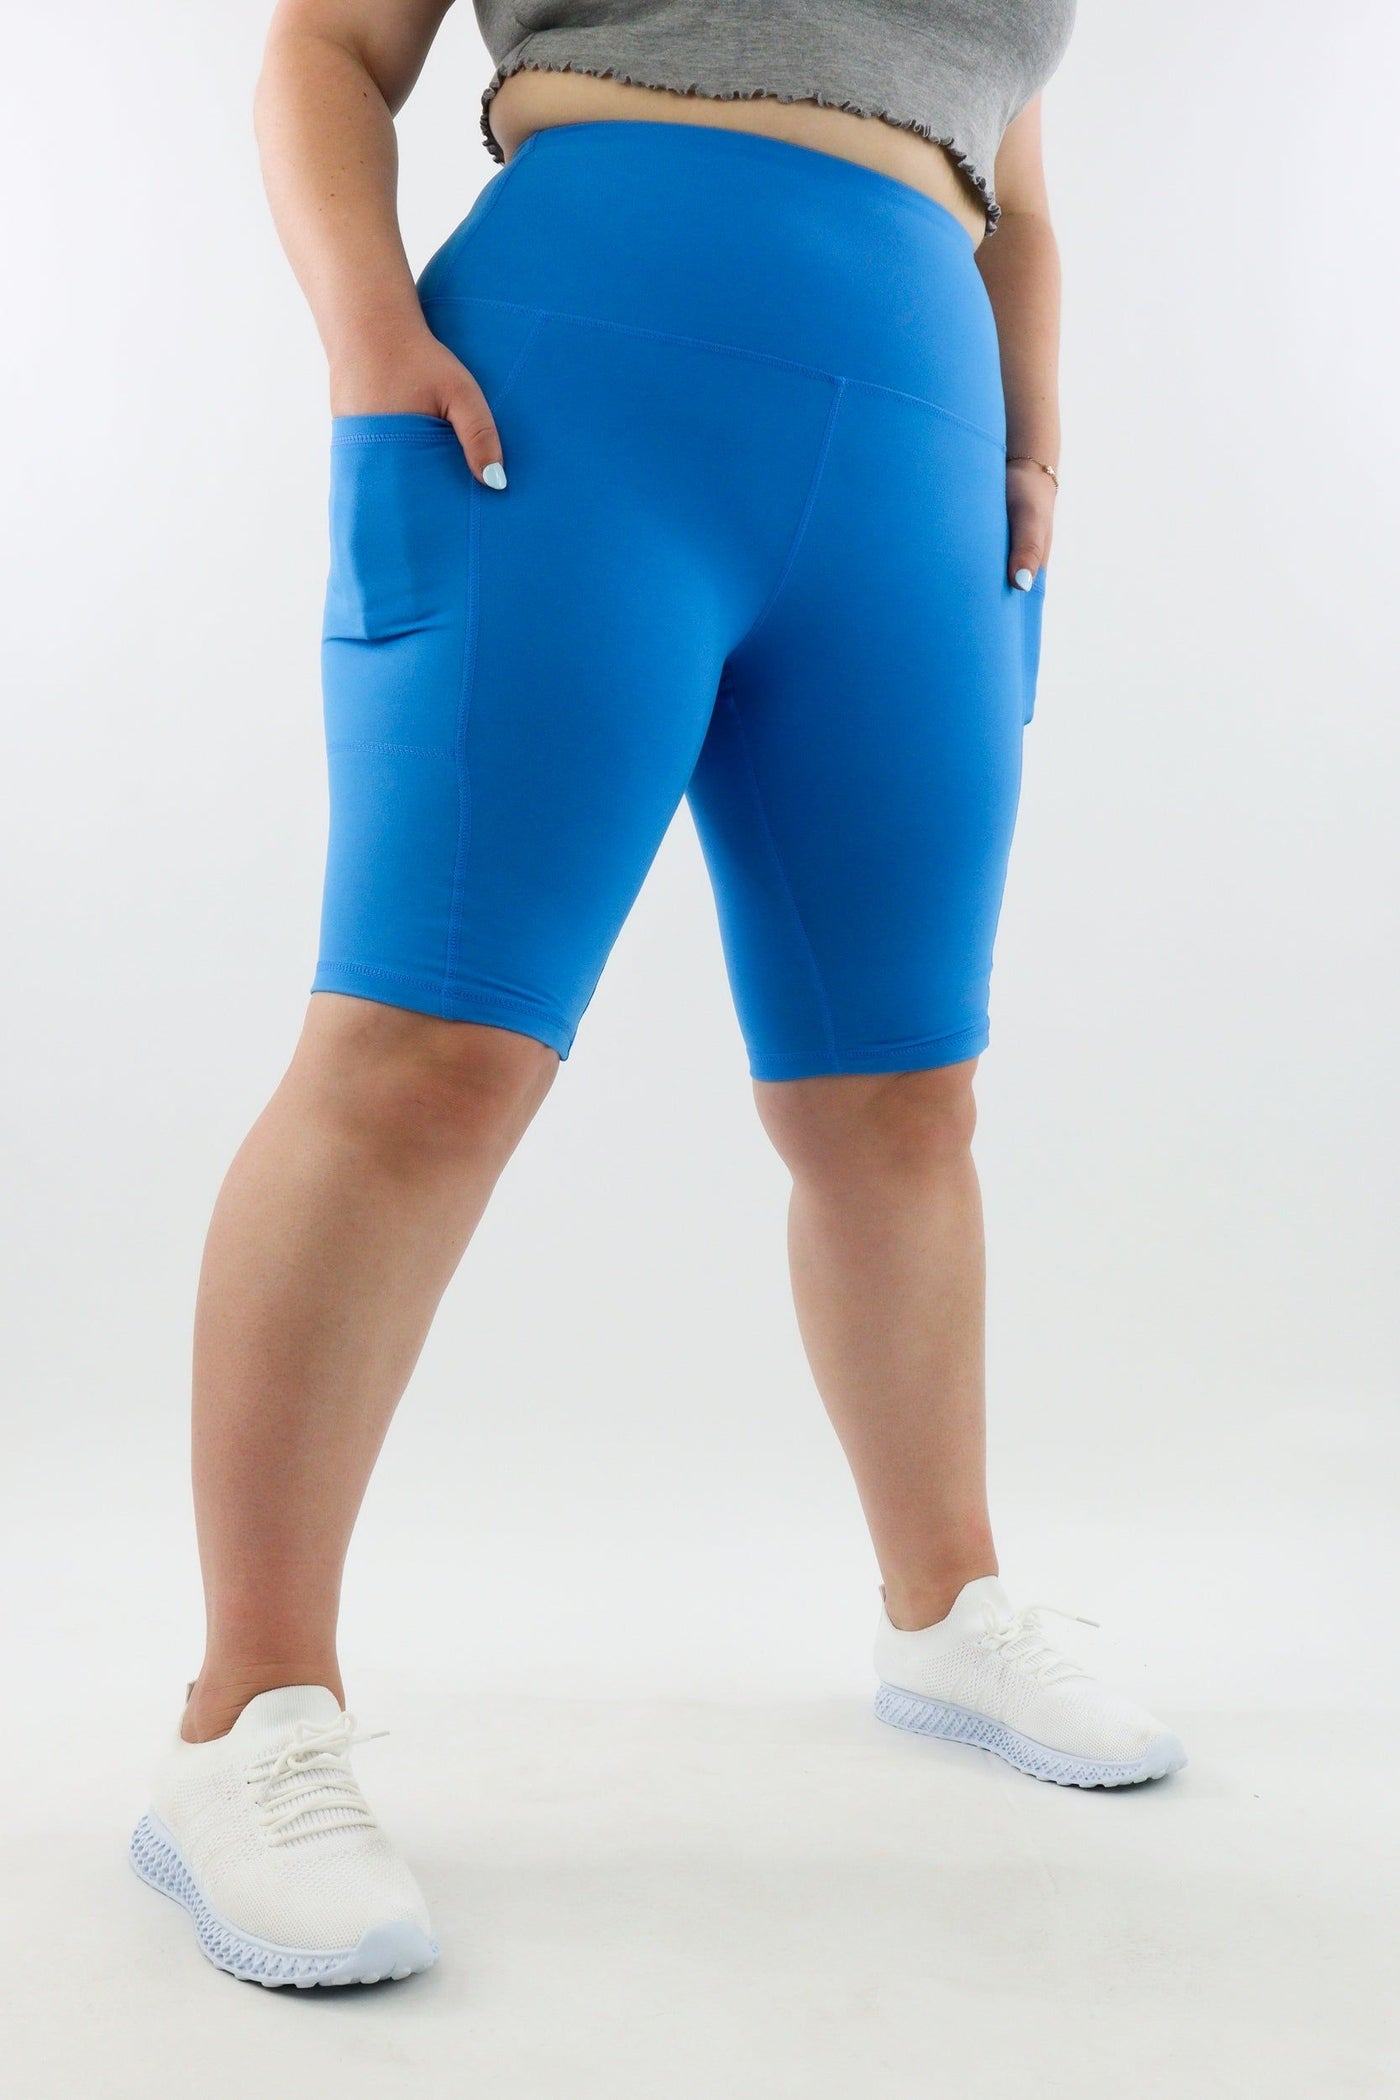 Bright Blue - Leg Pockets - Long Shorts - Hybrid 2.0 - Pawlie